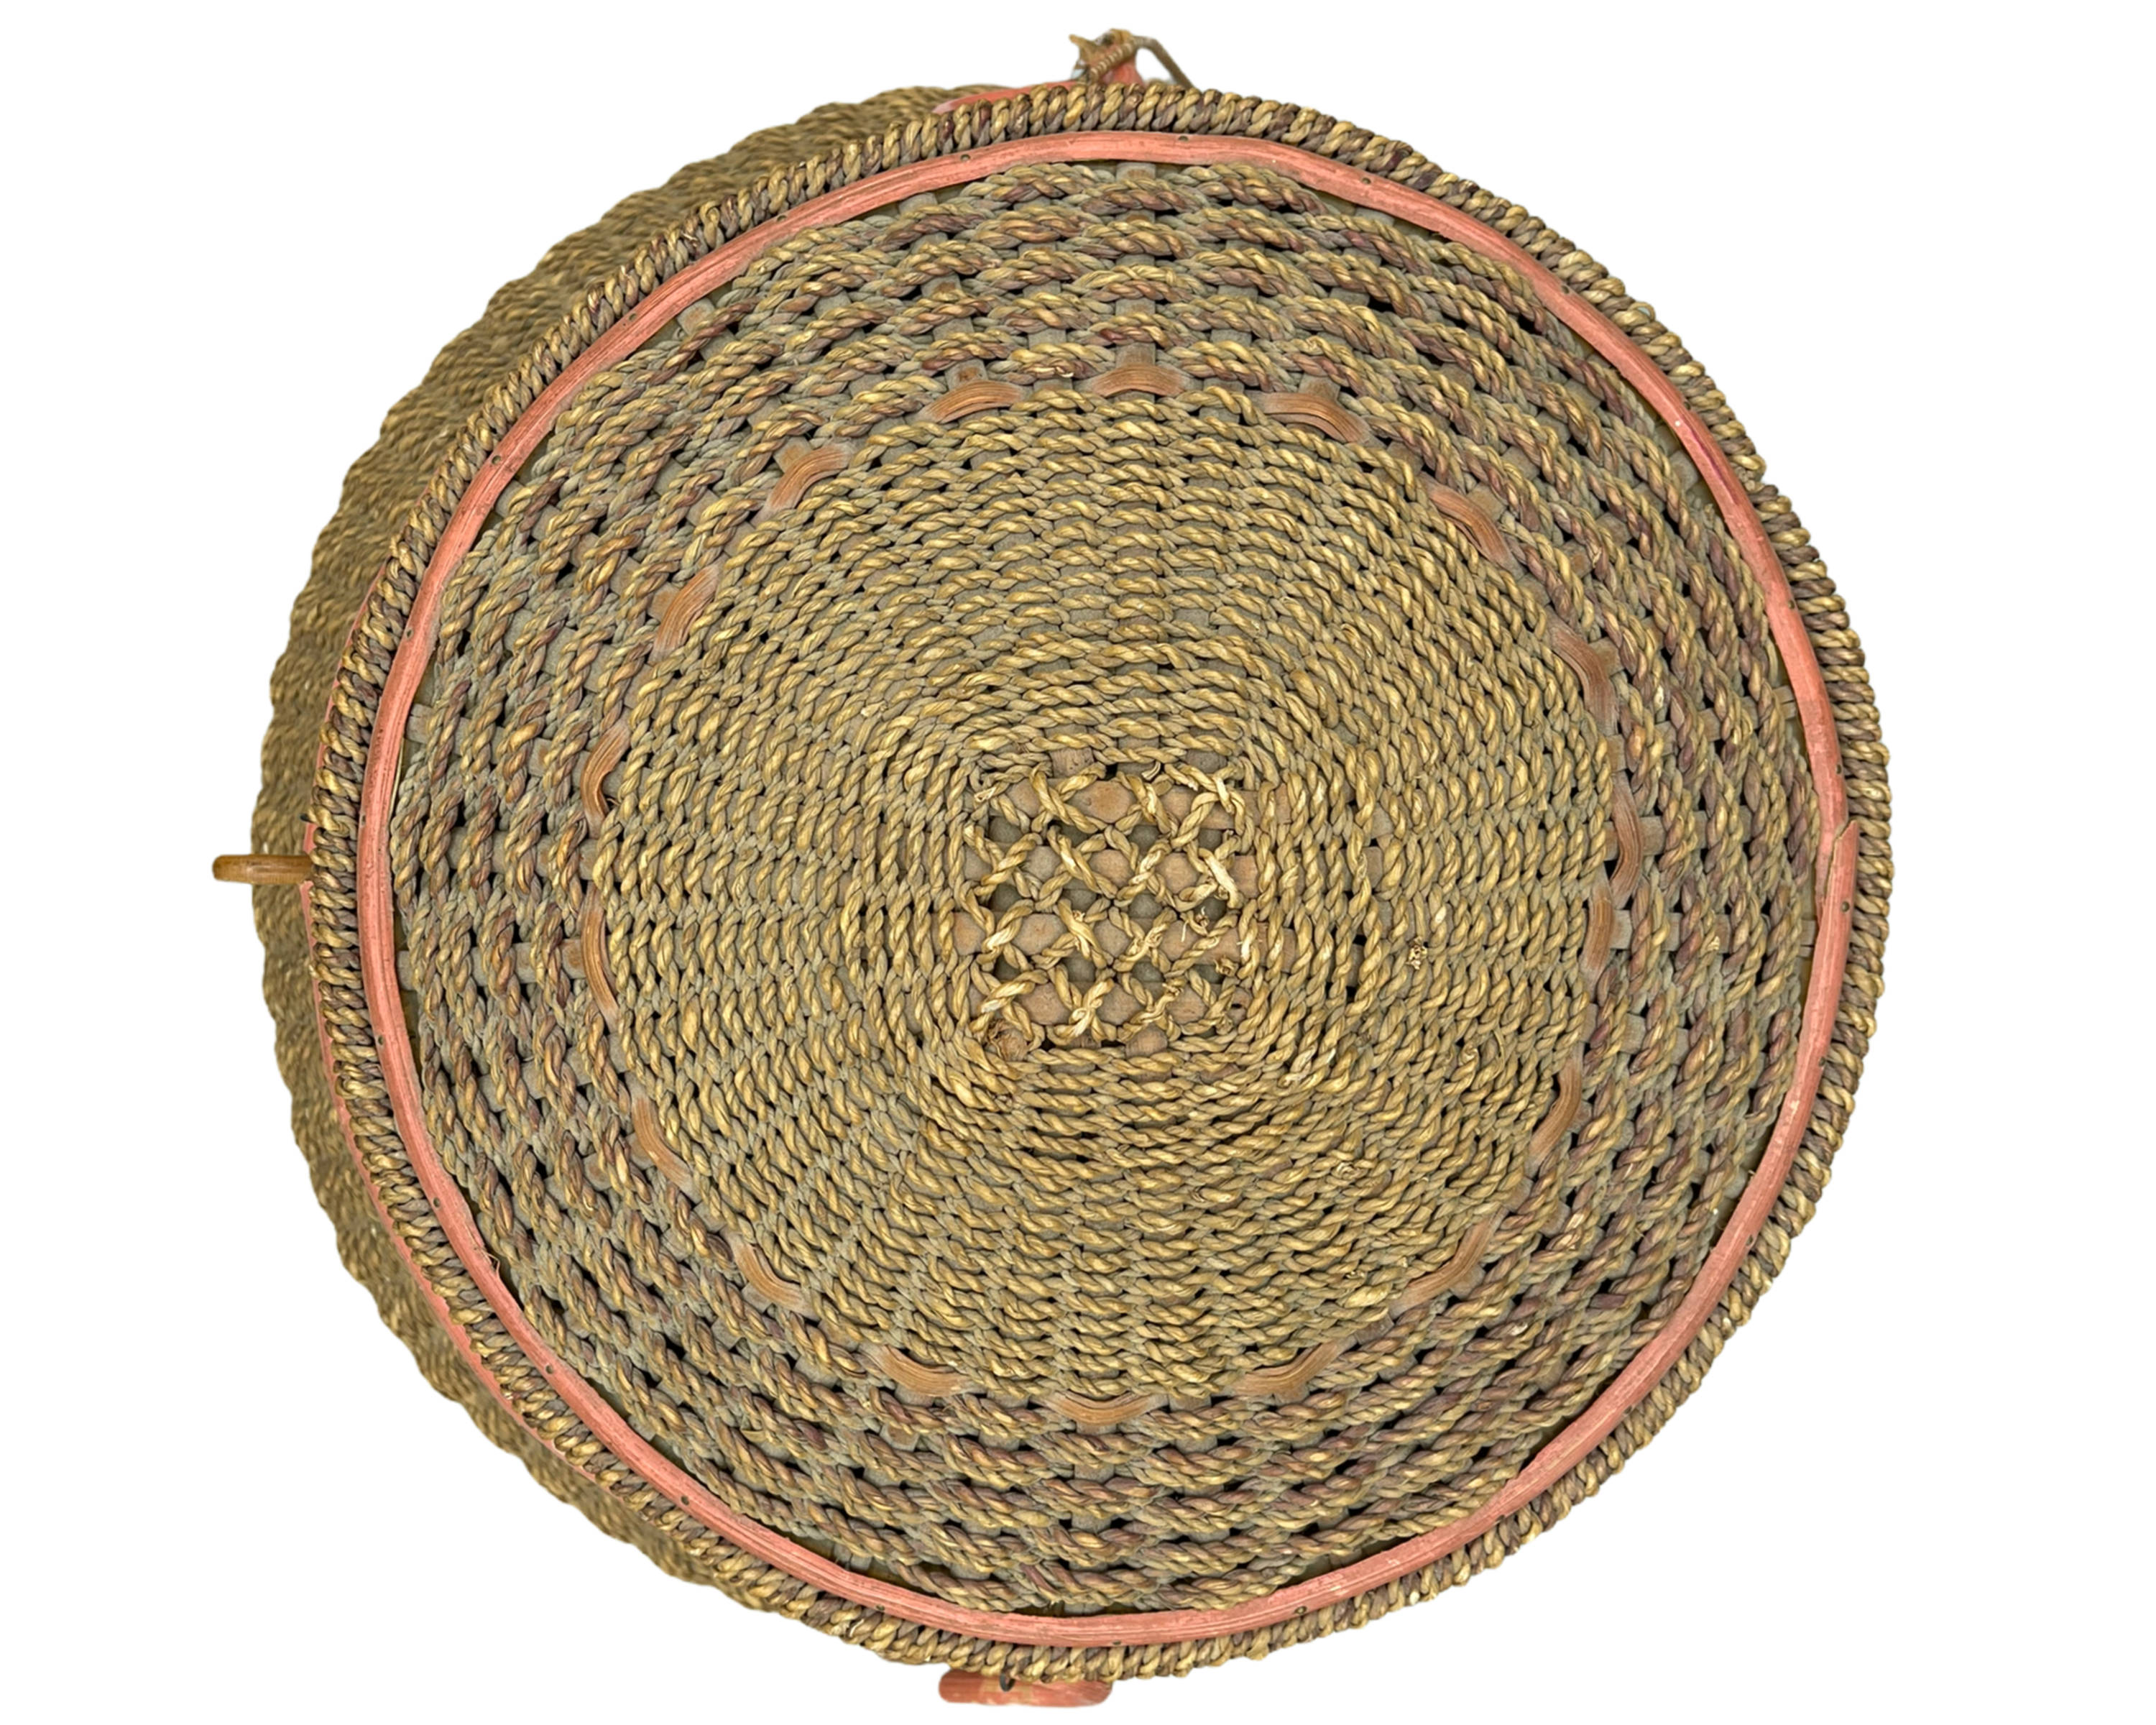 Maine-Native-American-Sweetgrass-Sewing-Basket-2.jpg